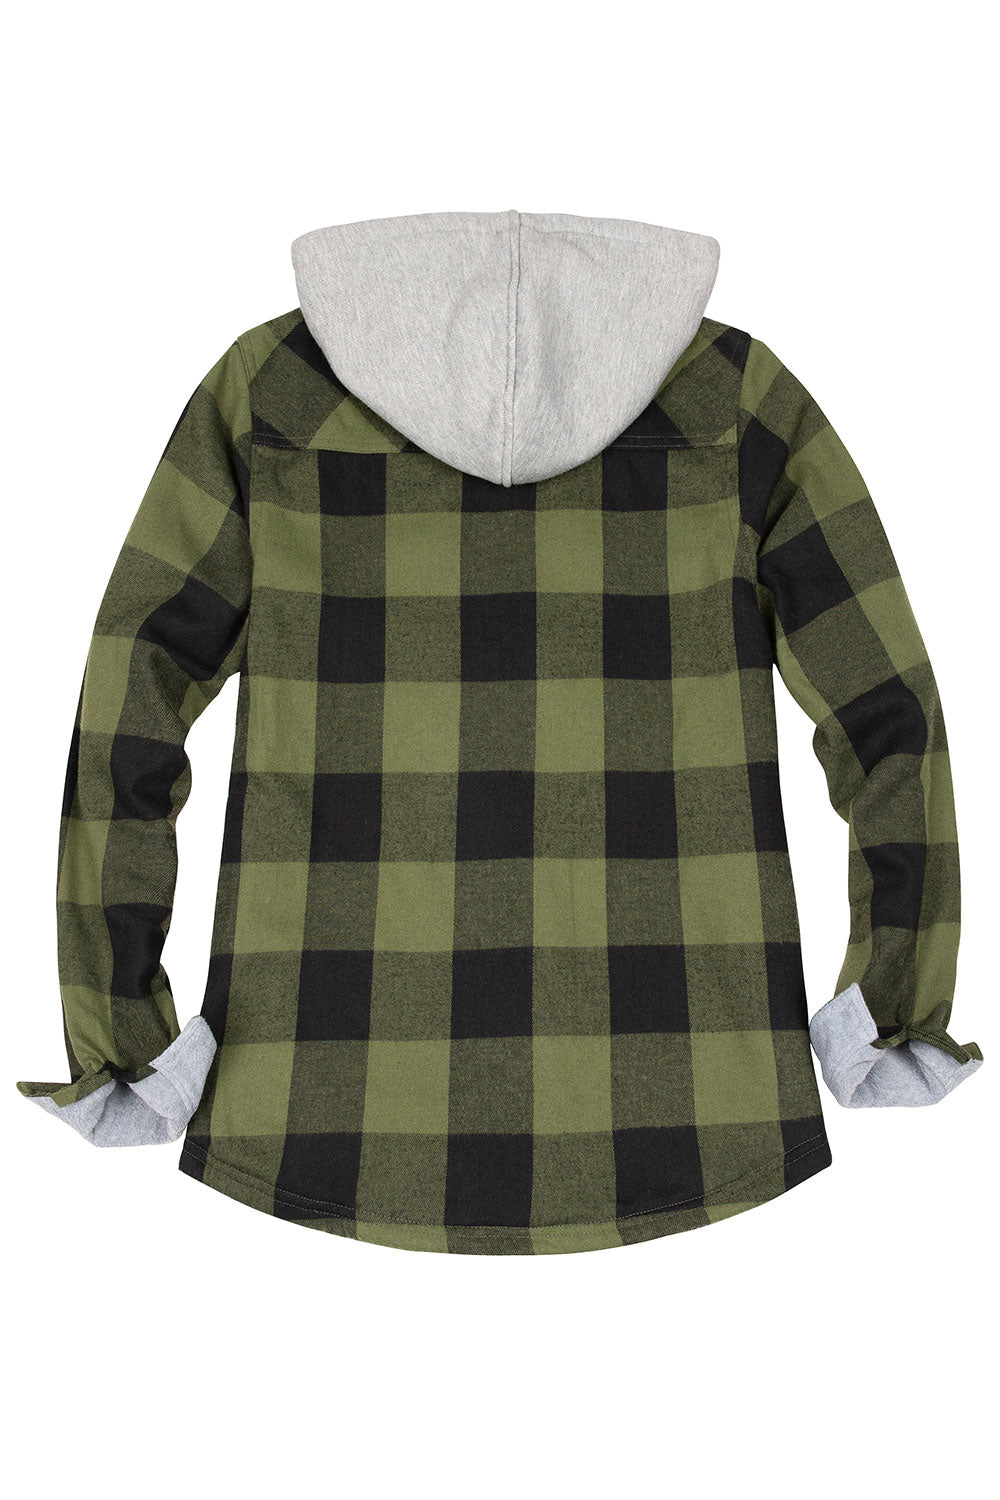 Matching Family Outfits - Women's Green Fleece Lined Flannel Shirt ...